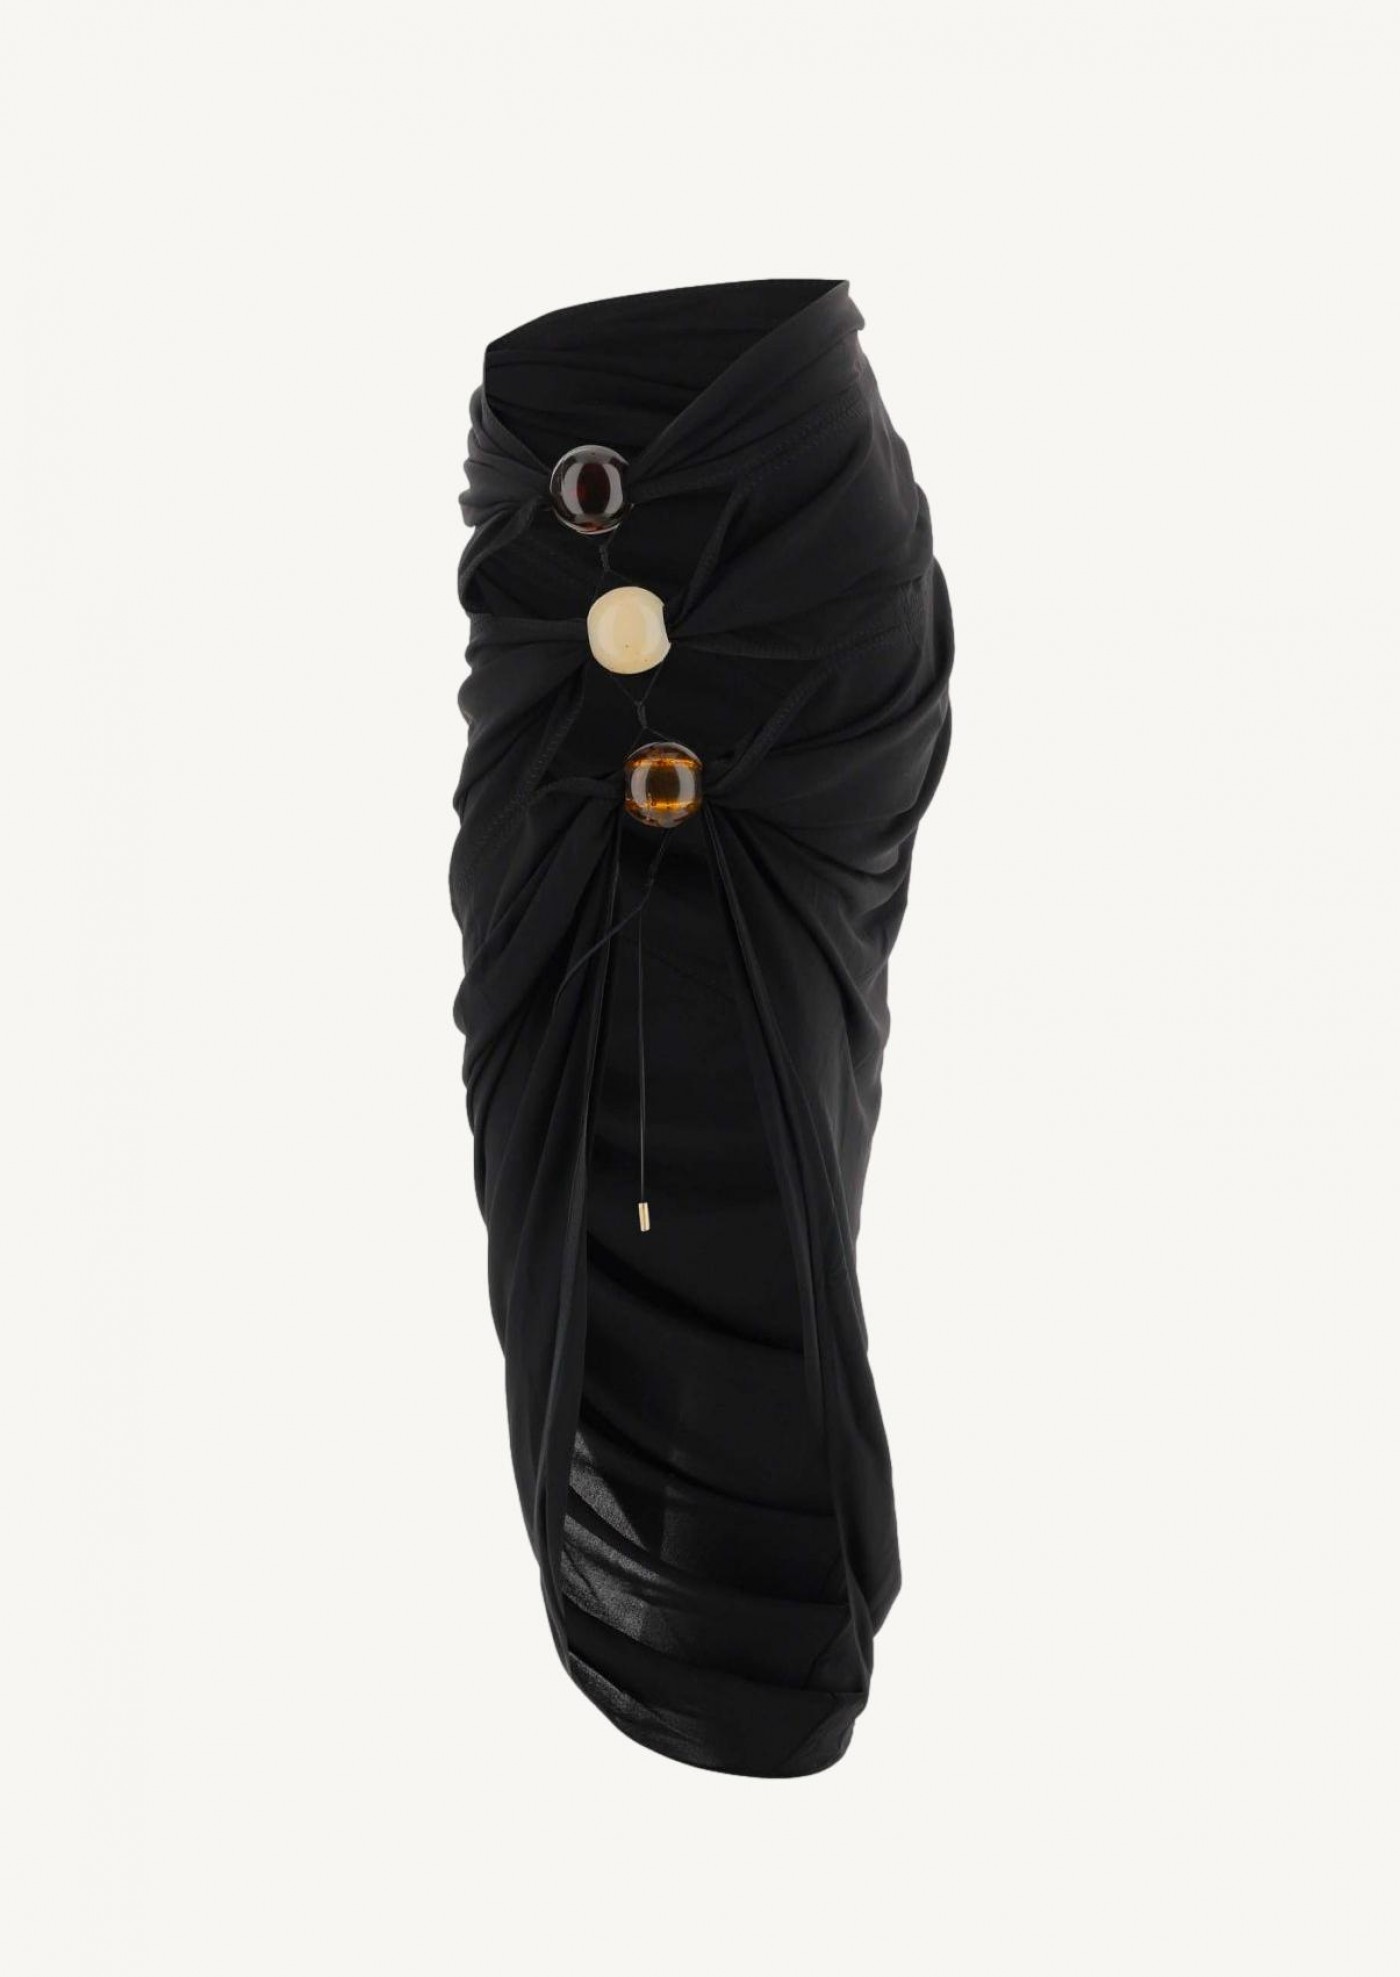 The black Perola skirt